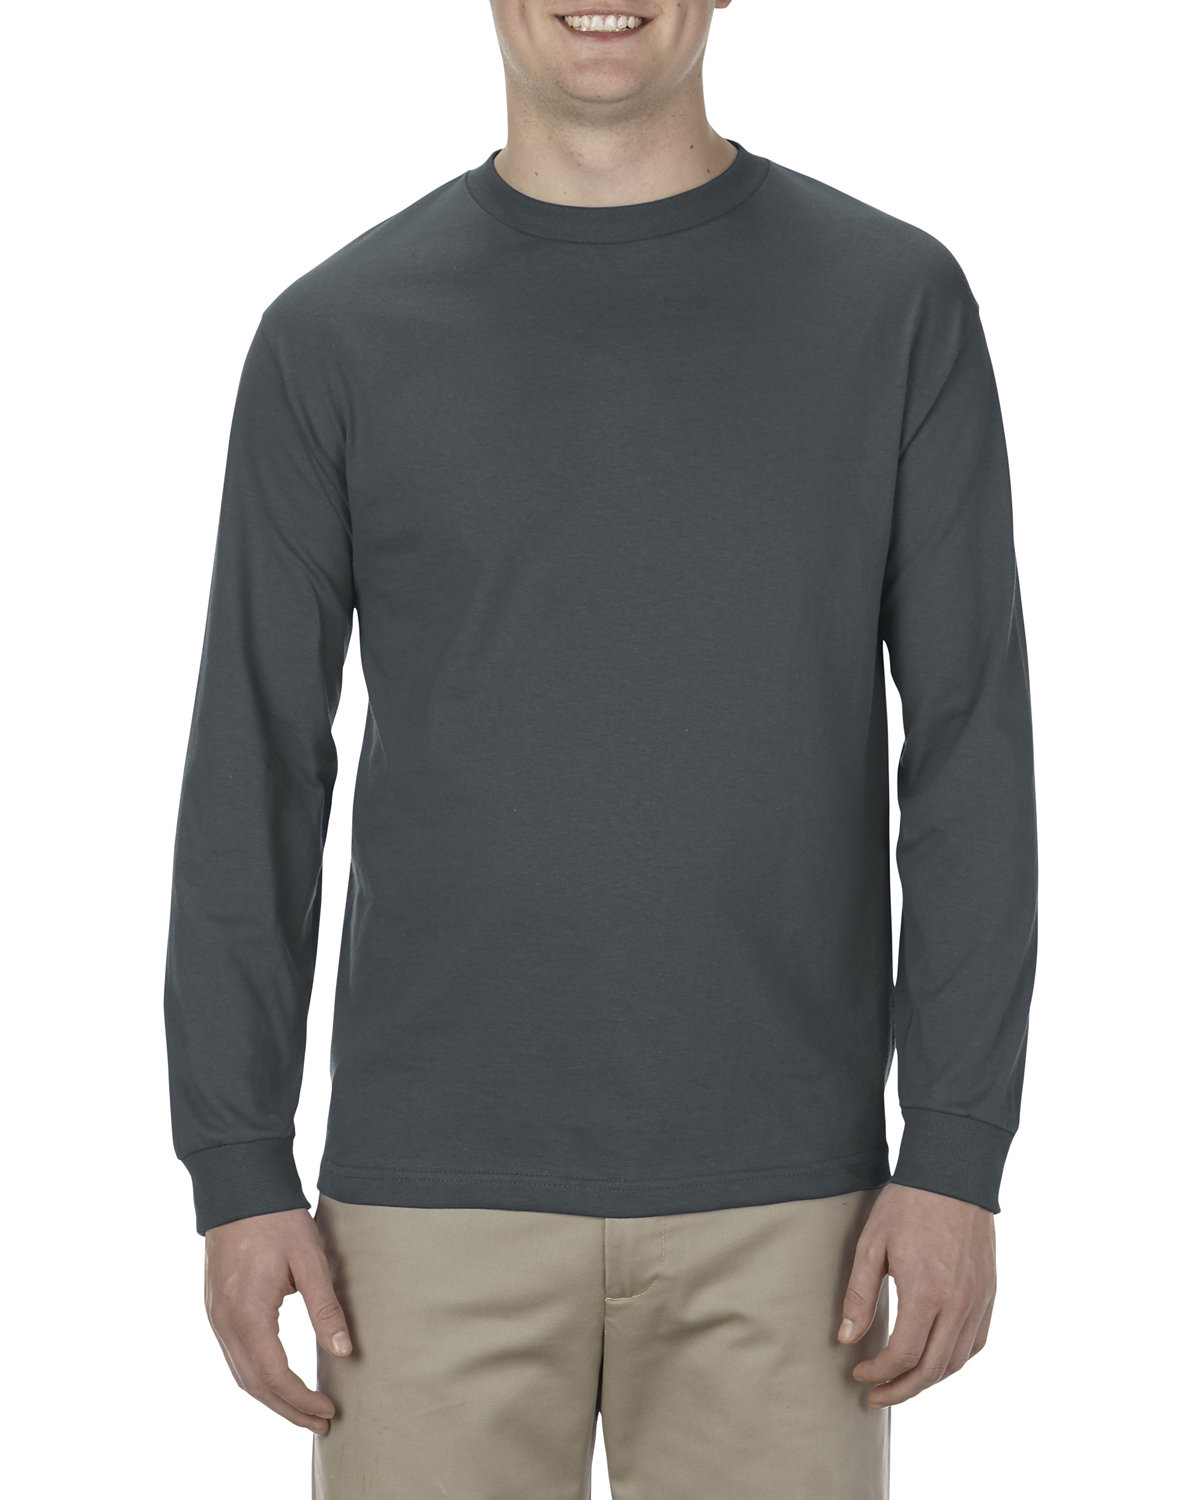 American Apparel Adult 6.0 oz., 100% Cotton Long-Sleeve T-Shirt CHARCOAL 